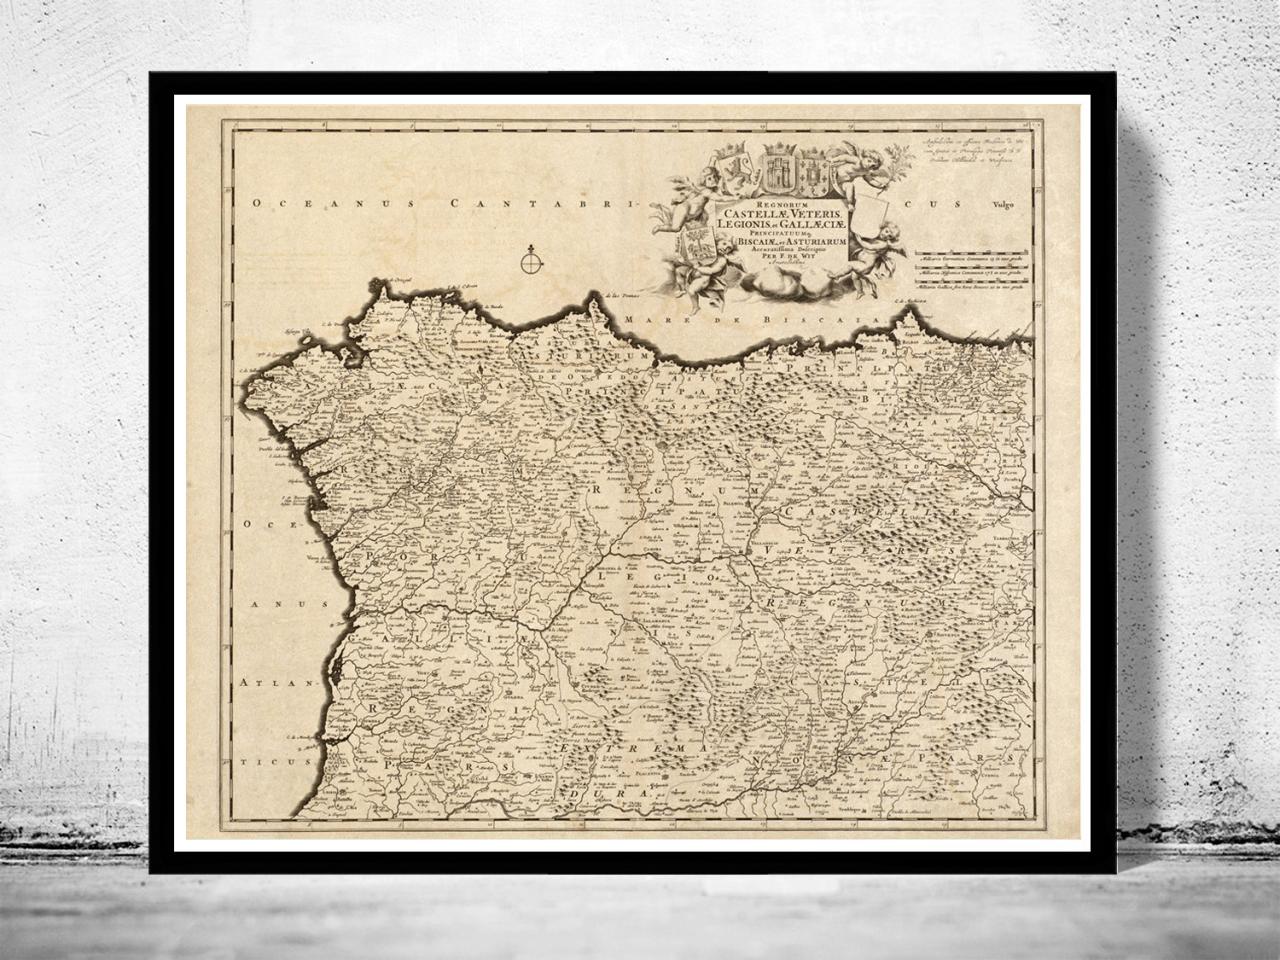 Old Map Of Galicia Coruña Corunya 1780 Spain